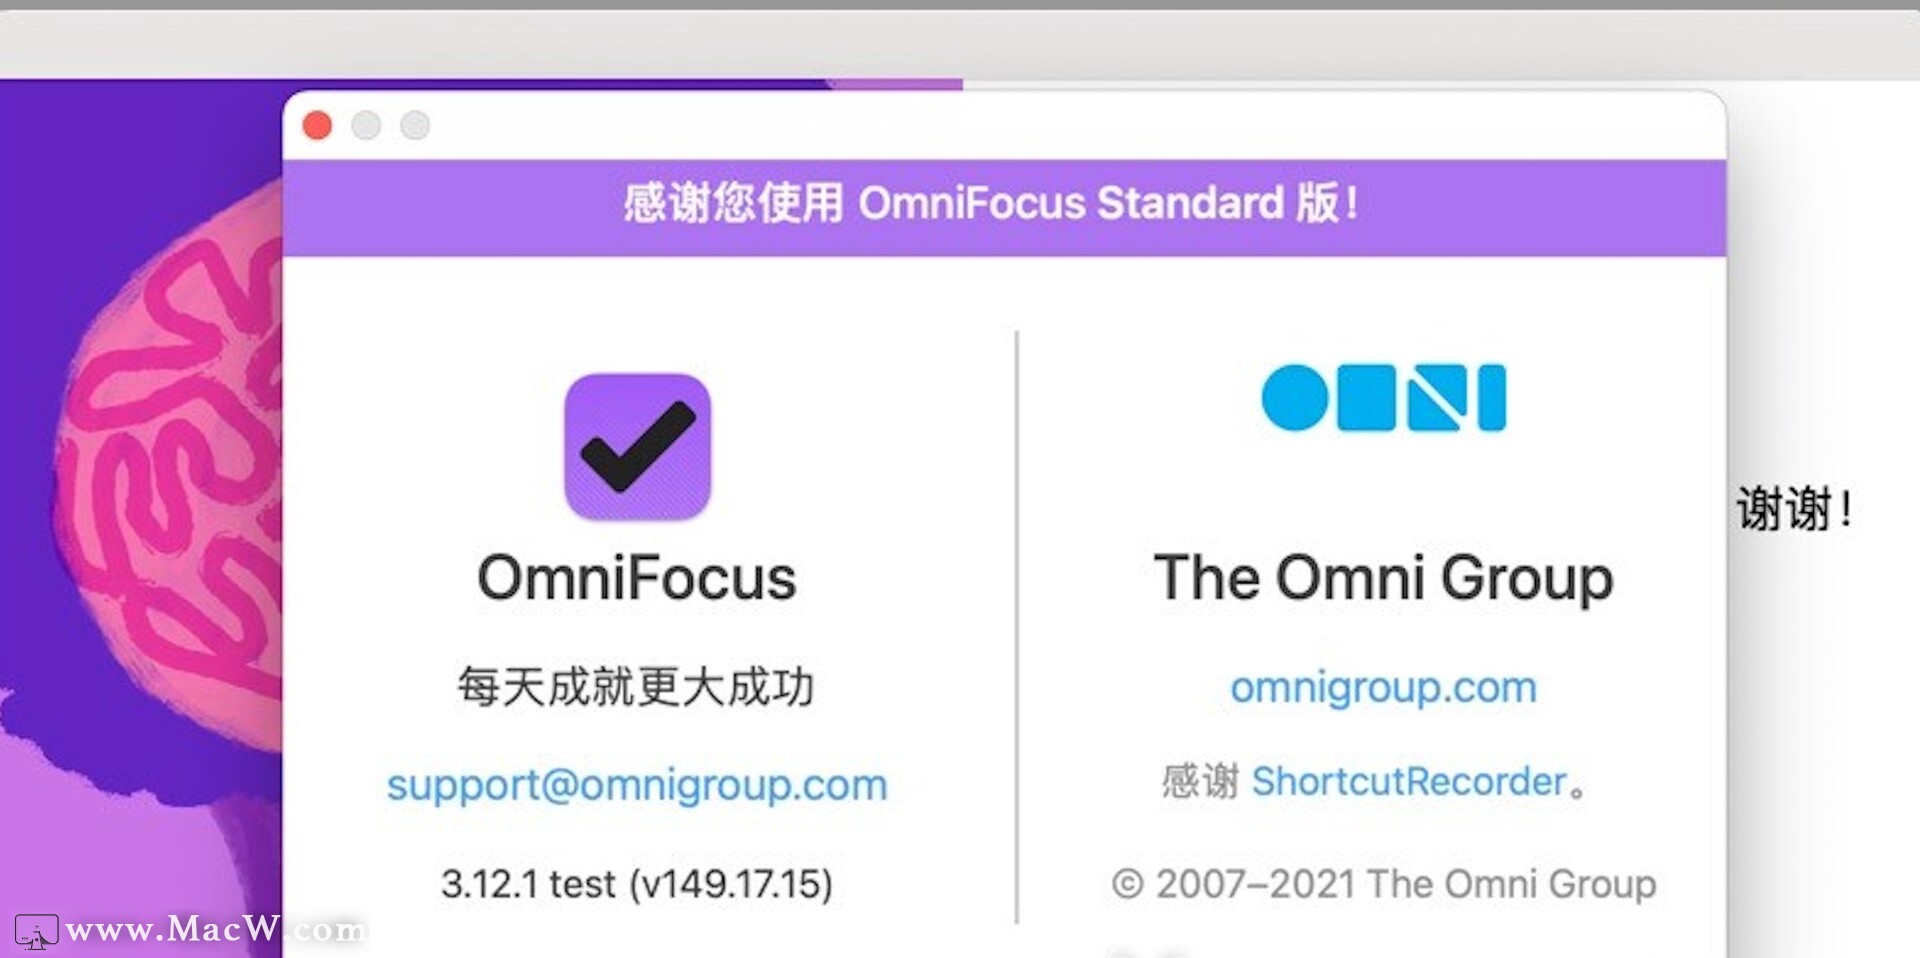 OmniFocus Pro 3 for Mac(最强GTD时间管理工具)v3.12.1(149.17.15)中文测试版 - 图1